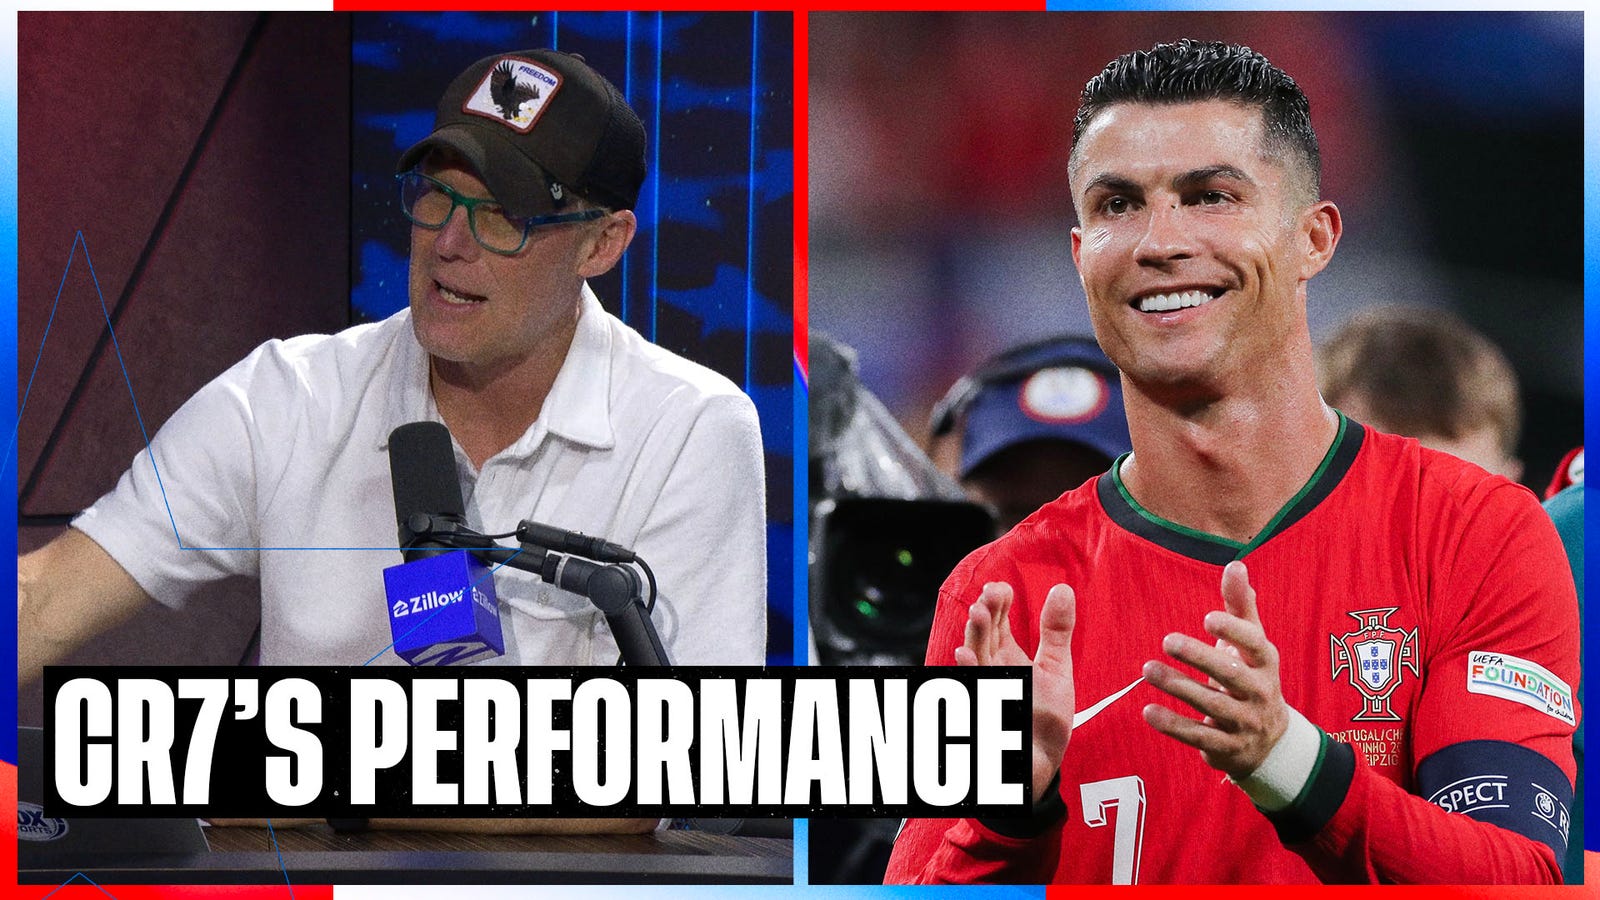 Did Ronaldo impress or disappoint vs. Czechia?